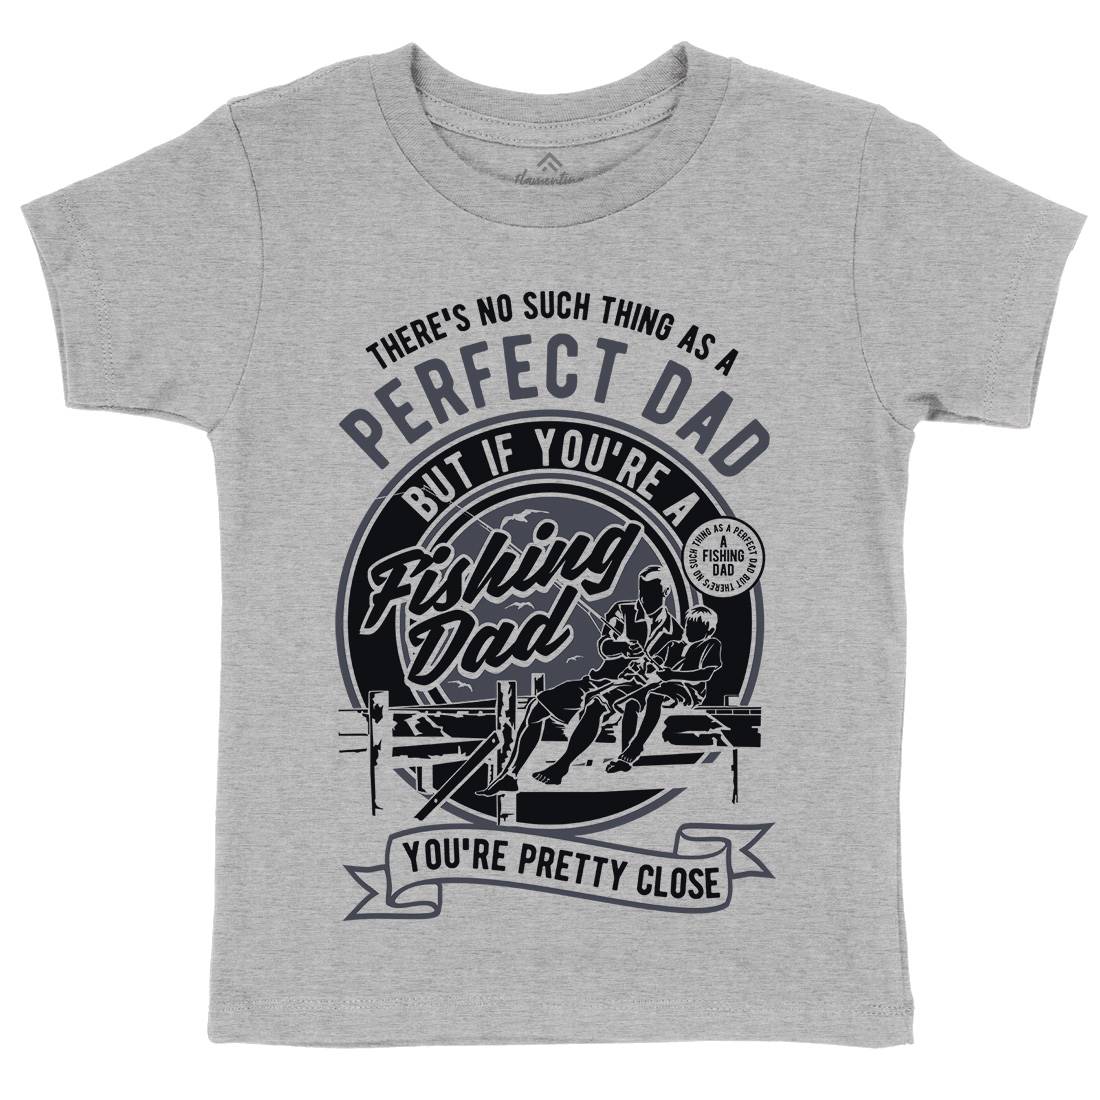 Dad Kids Crew Neck T-Shirt Fishing A661